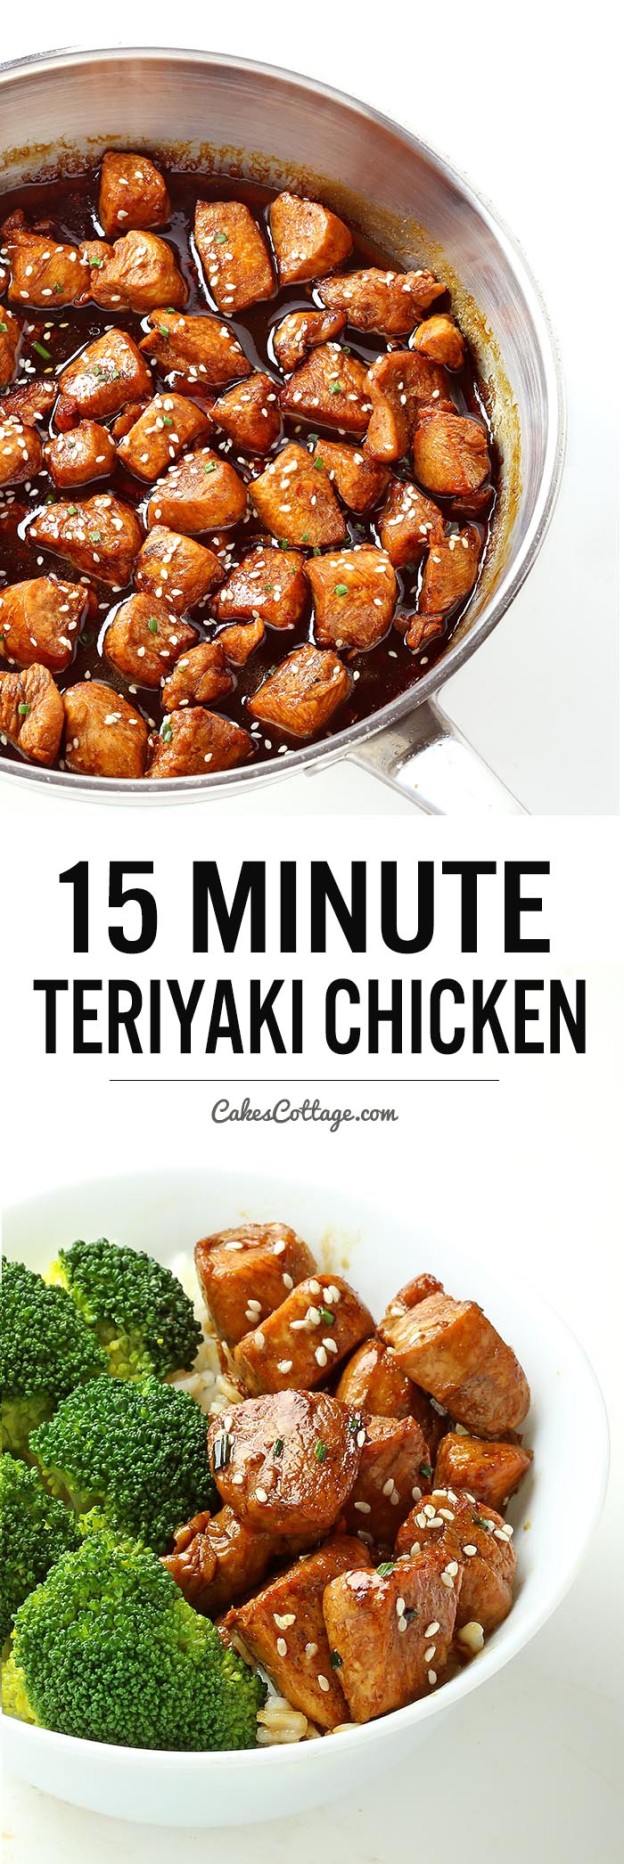 Easy Teriyaki Chicken - Cakescottage